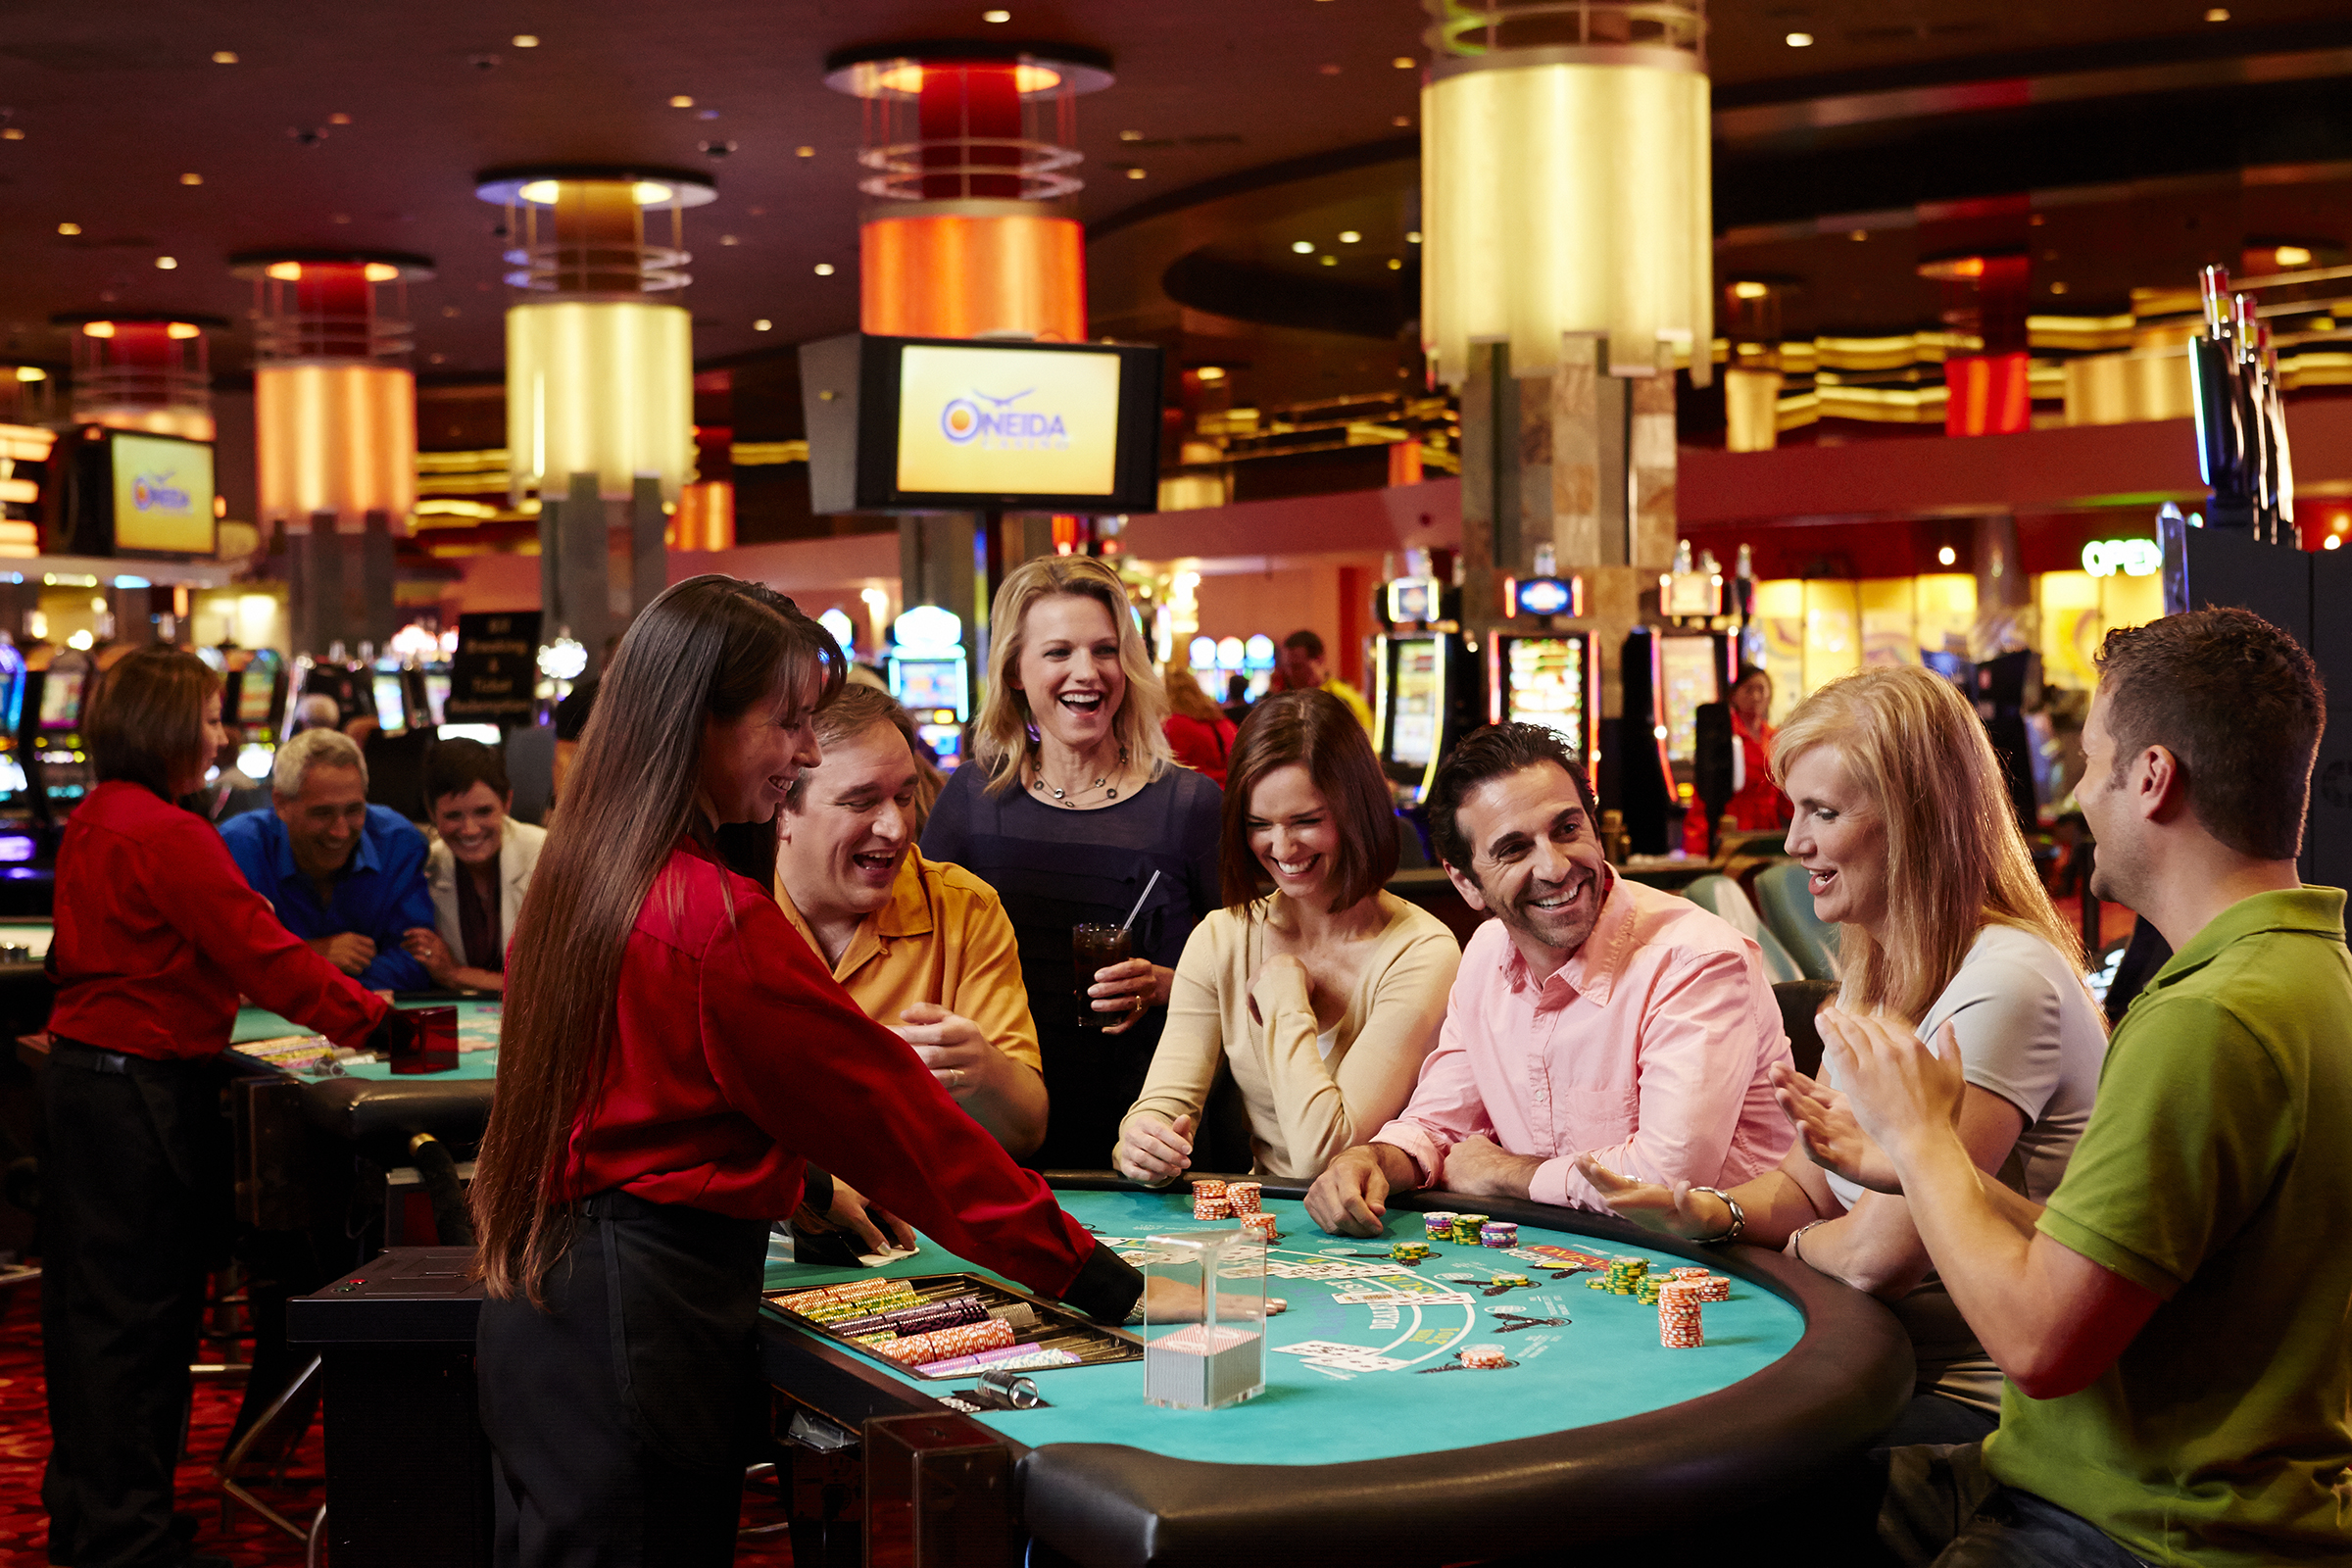 Oneida casino poker room green bay